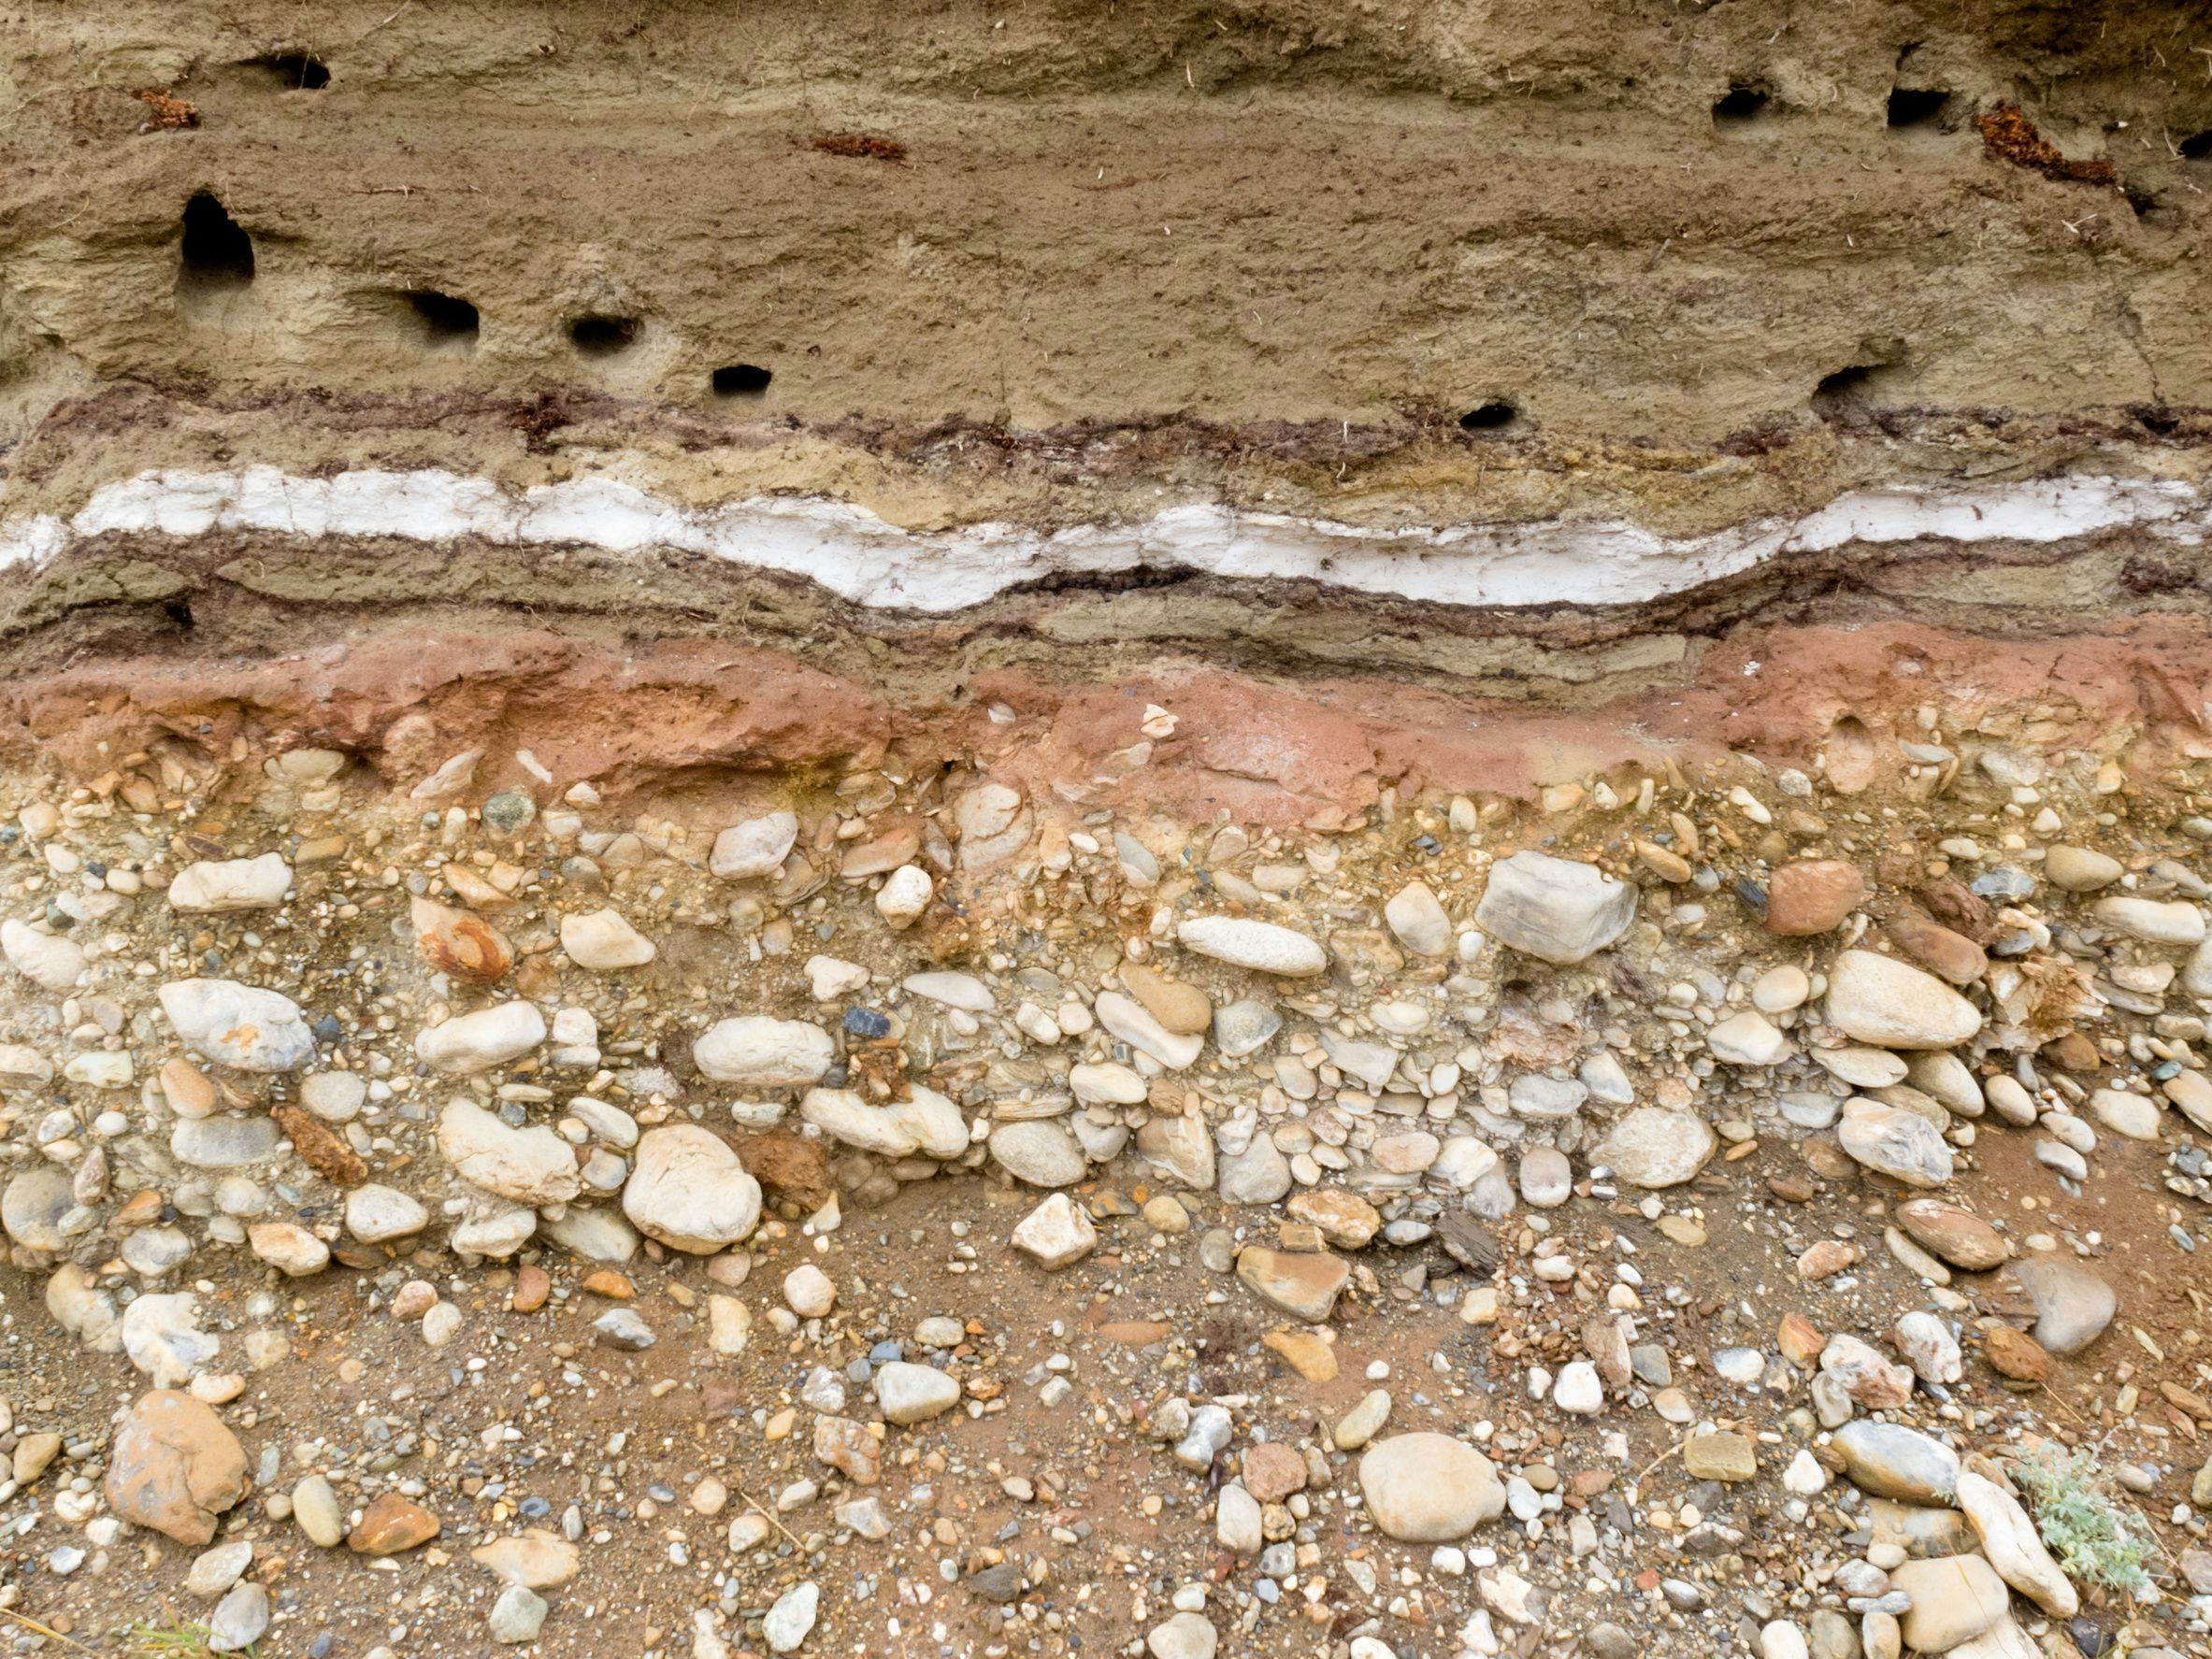 Banded geological sediment deposited in layers | Image Credit: © PiLensPhoto - stock.adobe.com